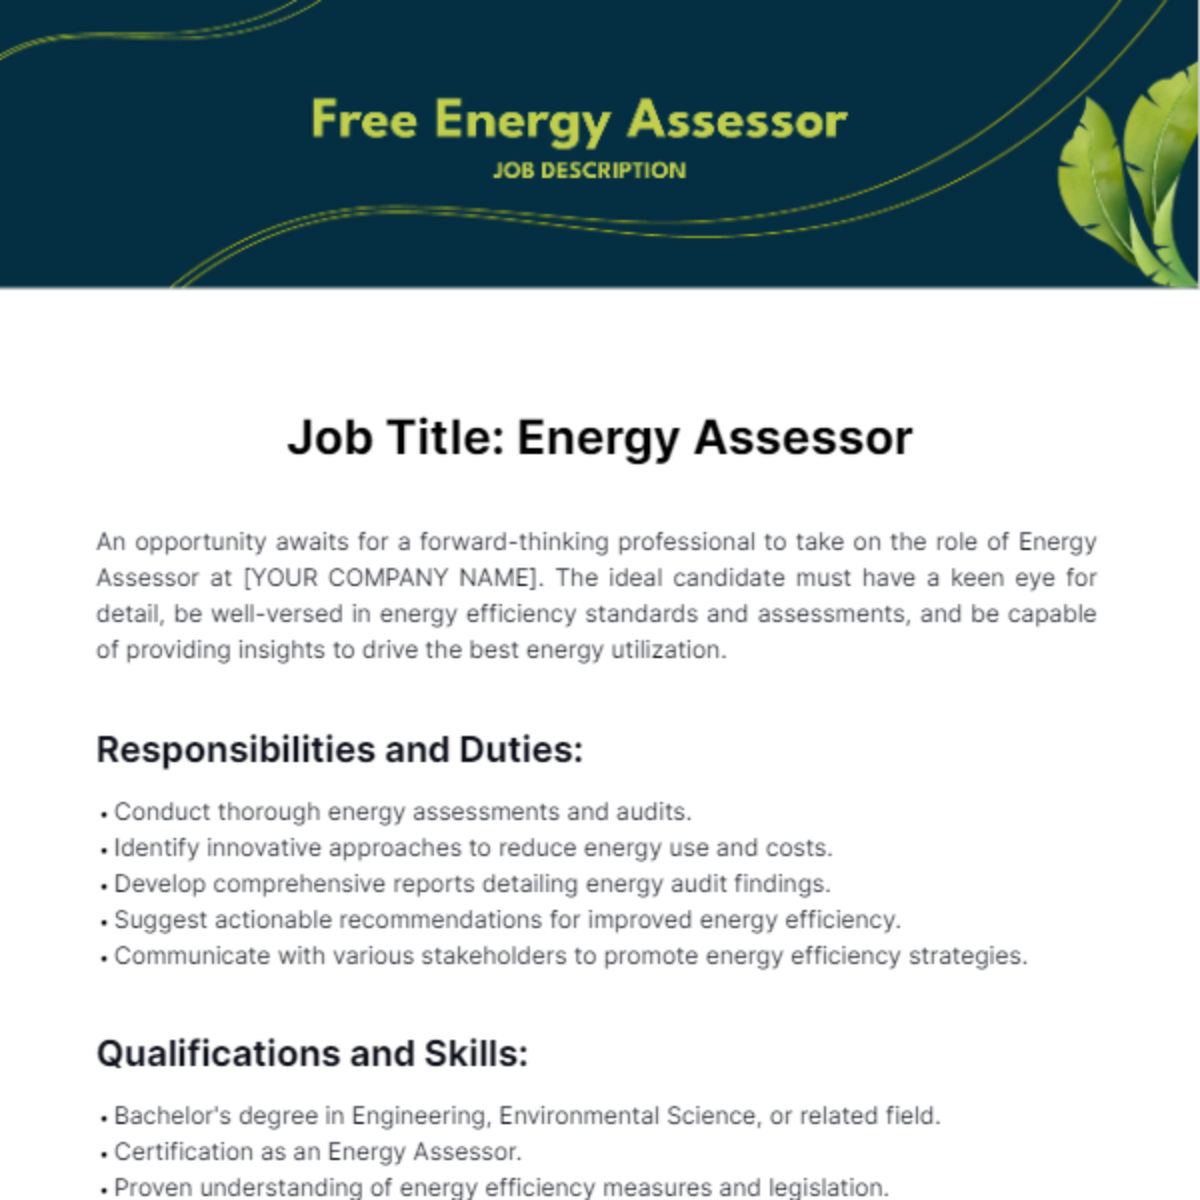 Free Energy Assessor Job Description Template